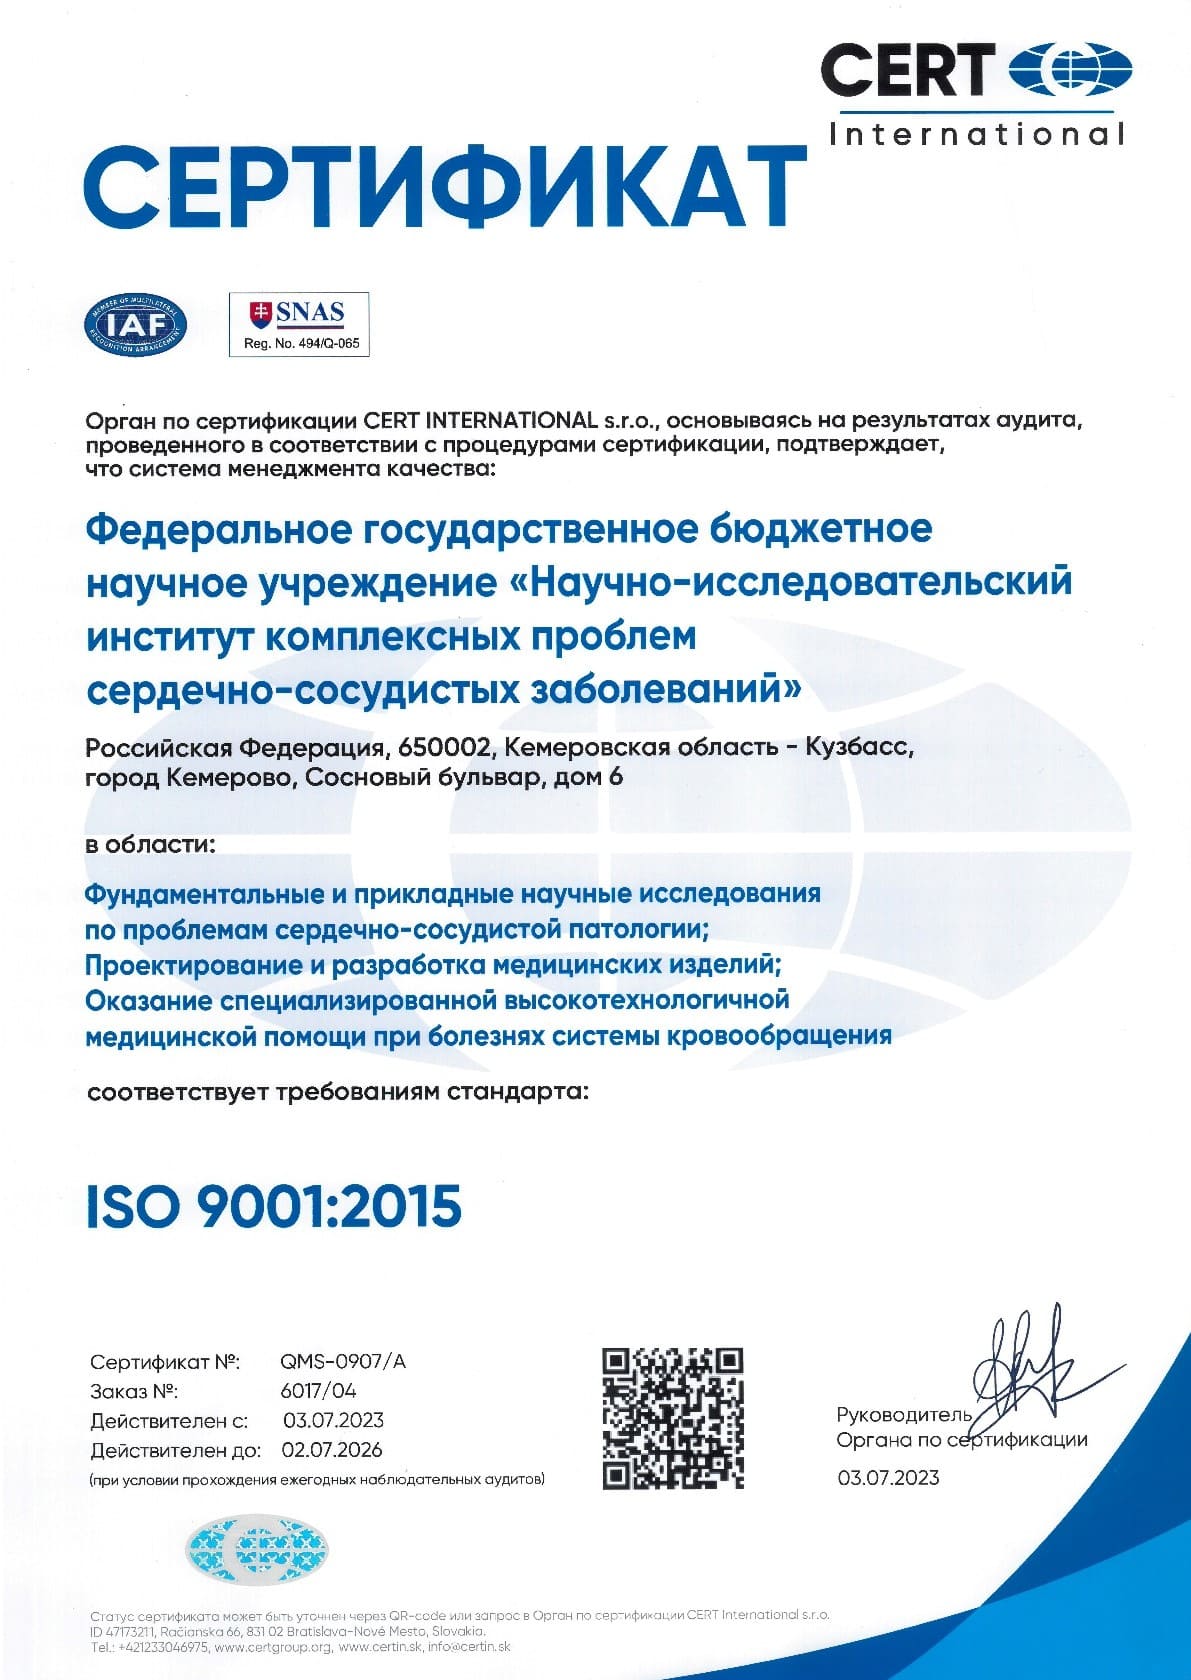 Сертификат CERT International